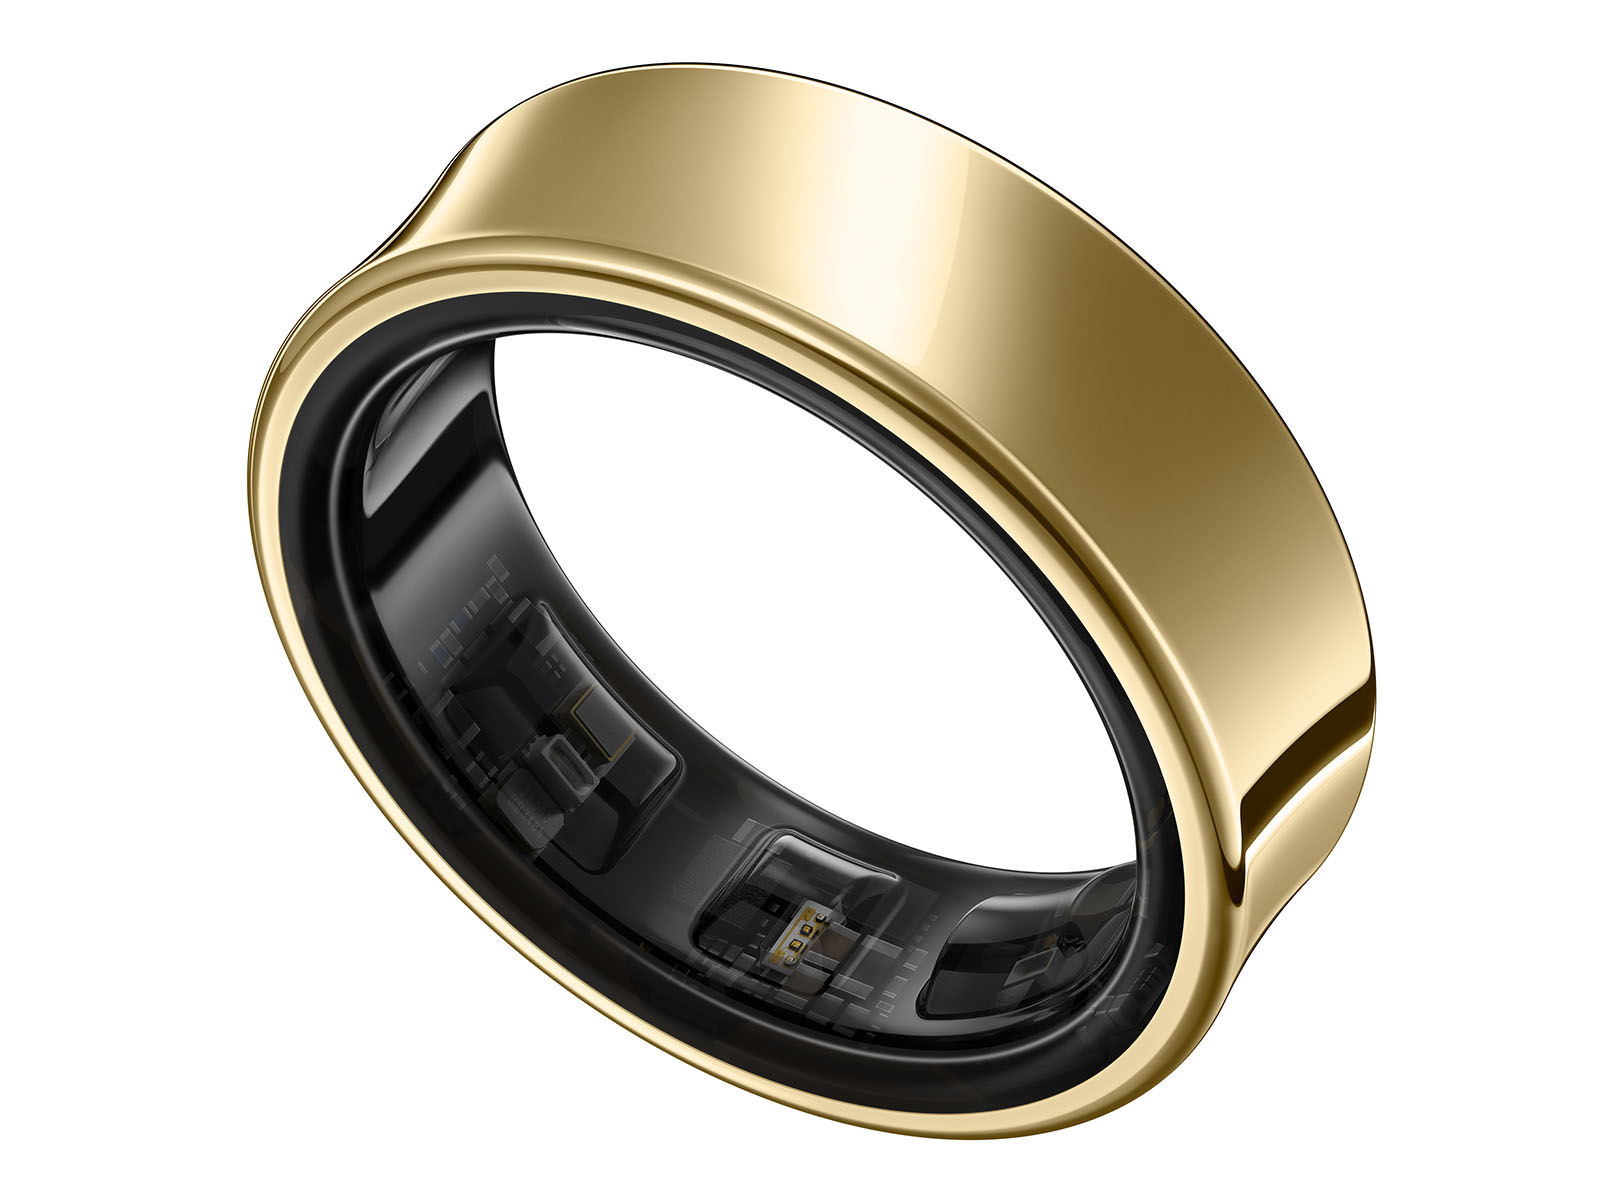 Thumbnail image of Galaxy Ring, Size 5, Titanium Gold